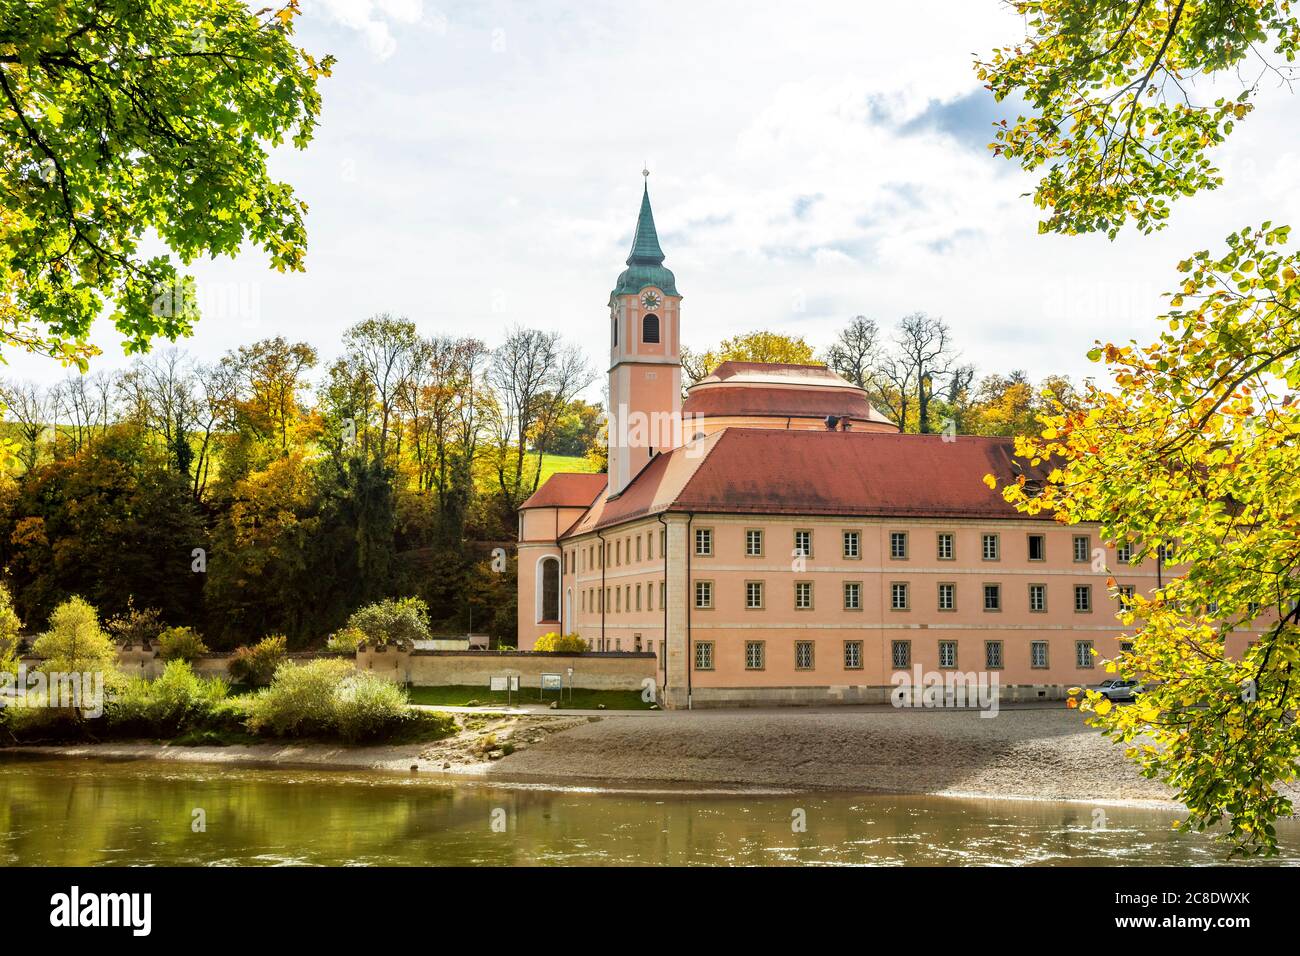 Germany, Bavaria, Kelheim, Weltenburg Abbey standing on bank of Danube Stock Photo